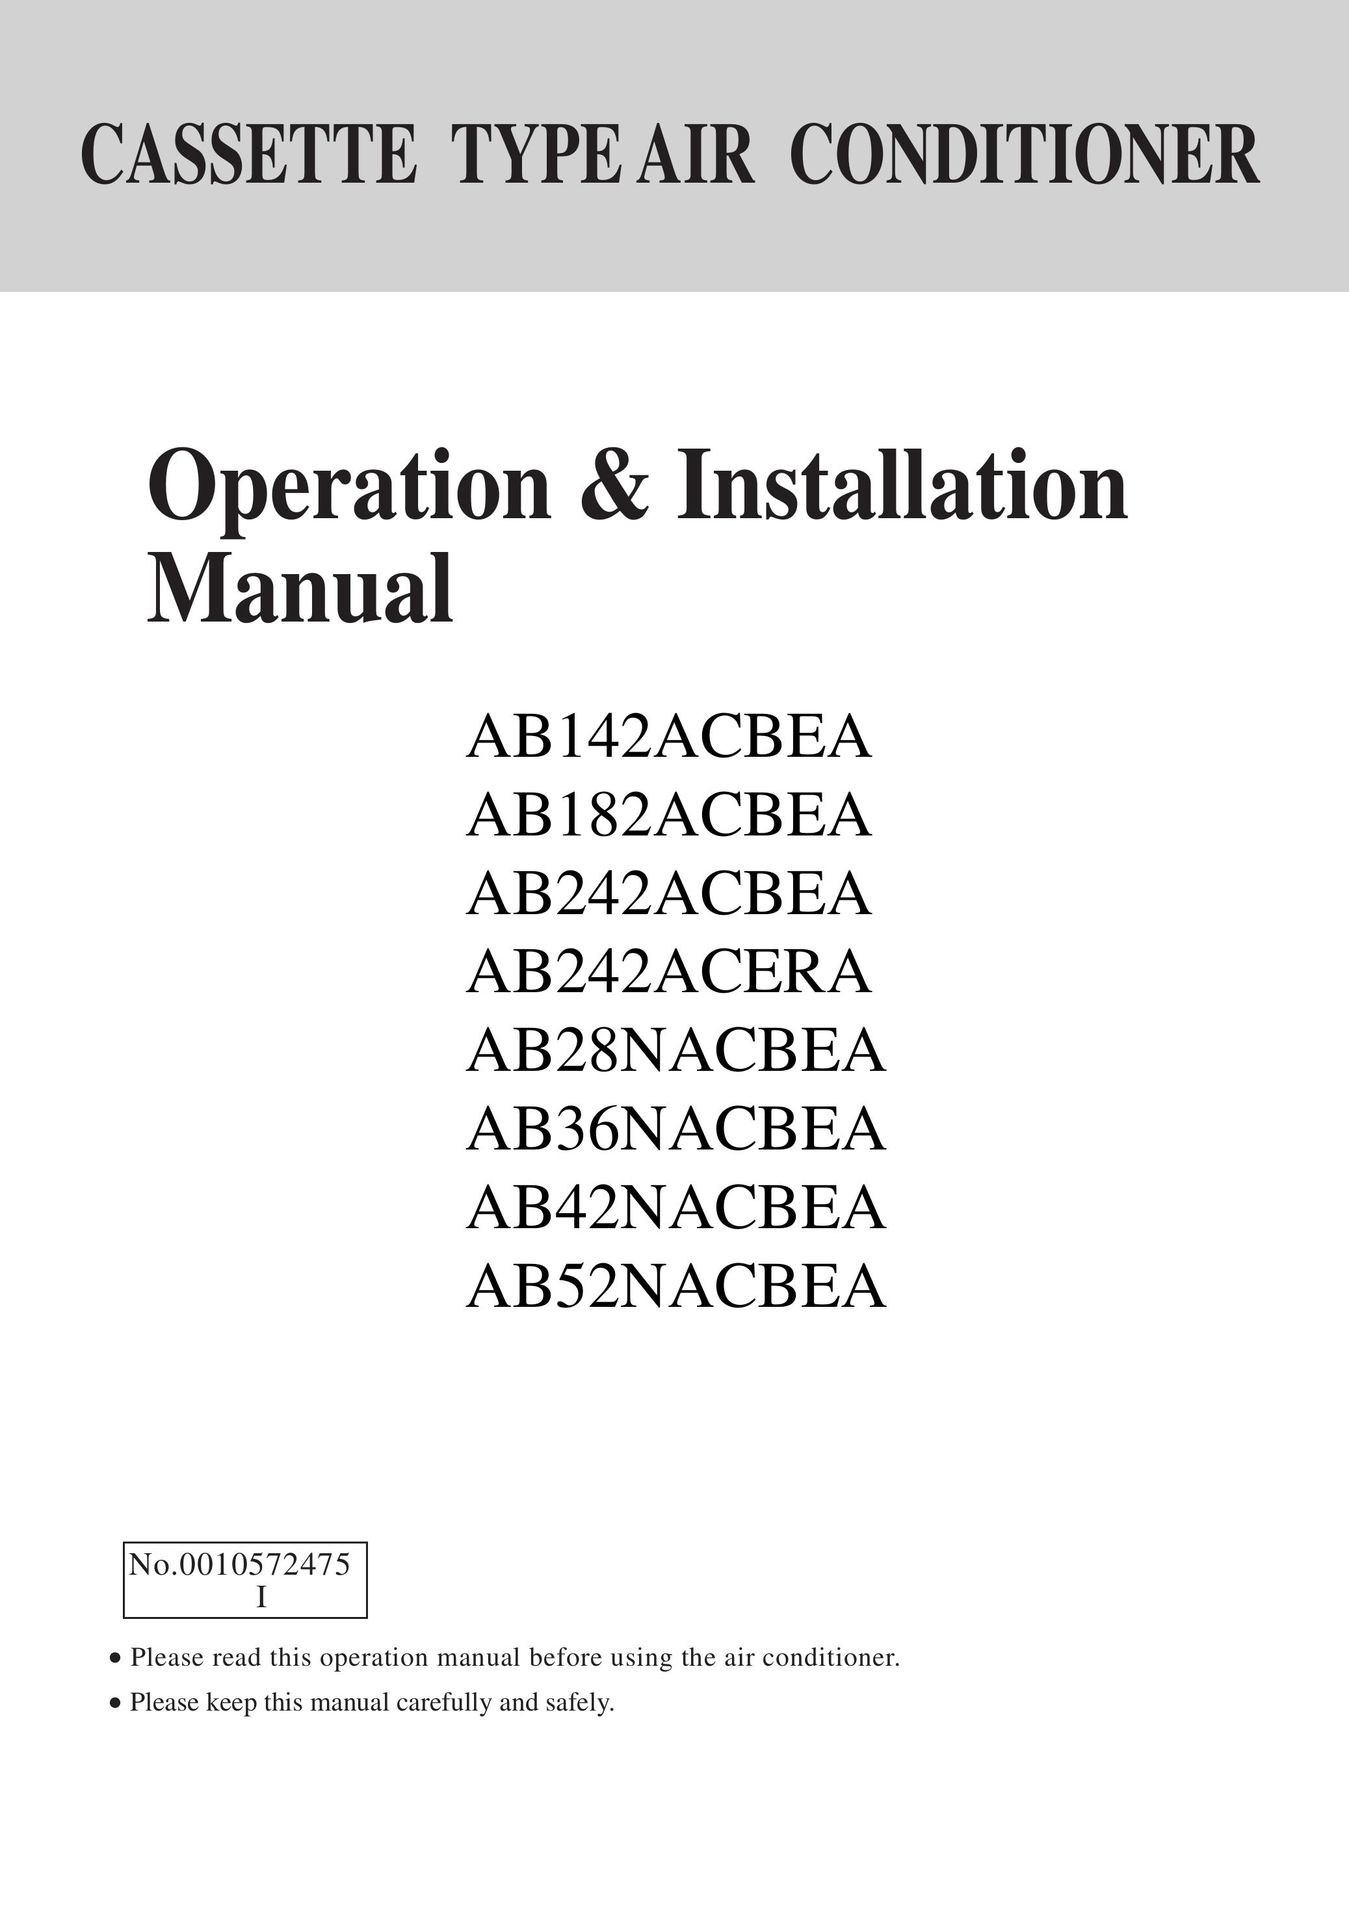 Haier AB28NACBEA Air Conditioner User Manual